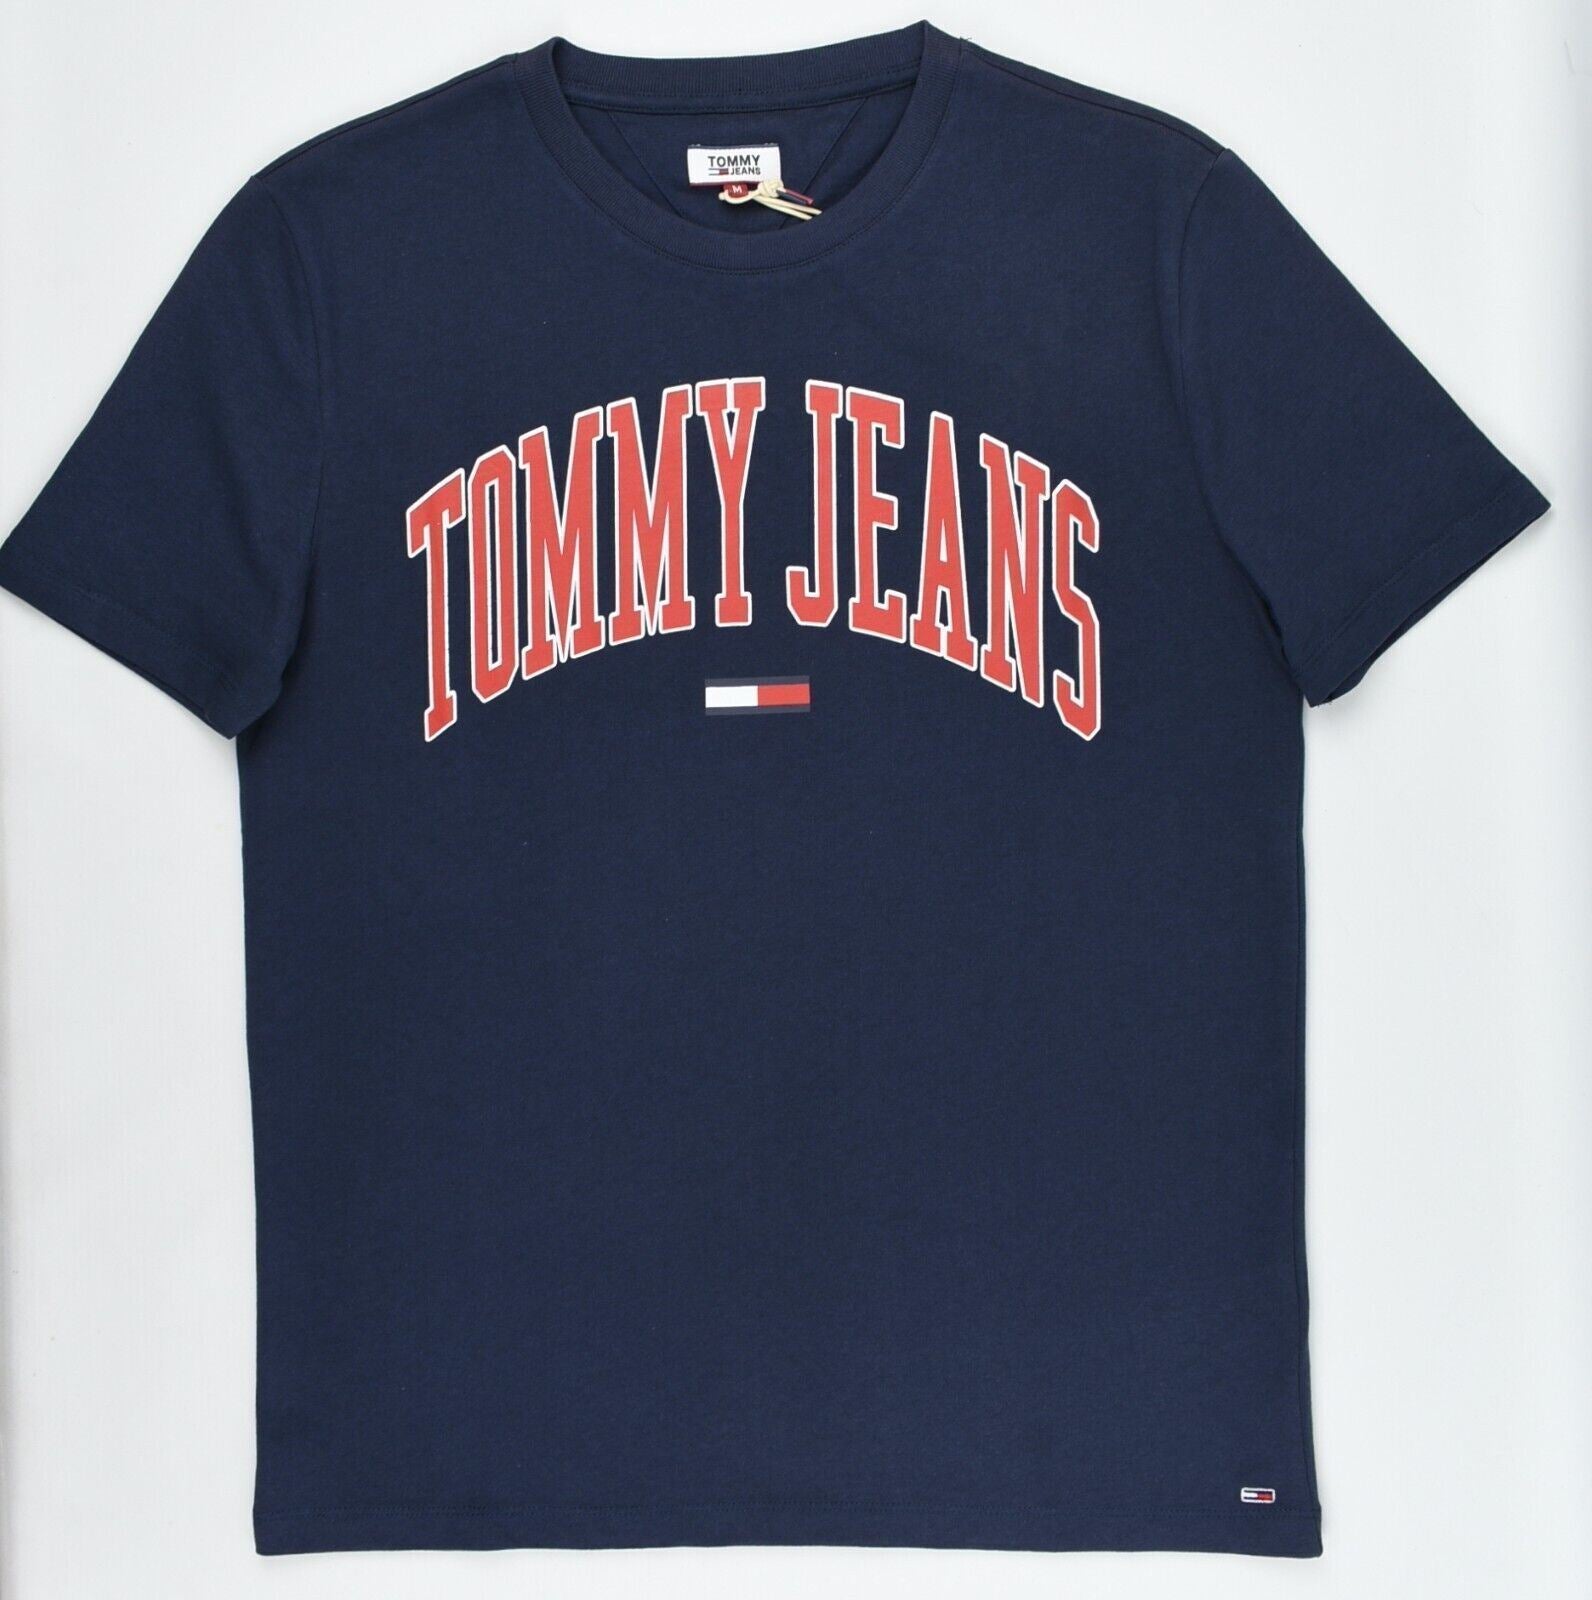 TOMMY HILFIGER Women's Collegiate Logo T-shirt, Twilight Blue, size XS (UK 8)